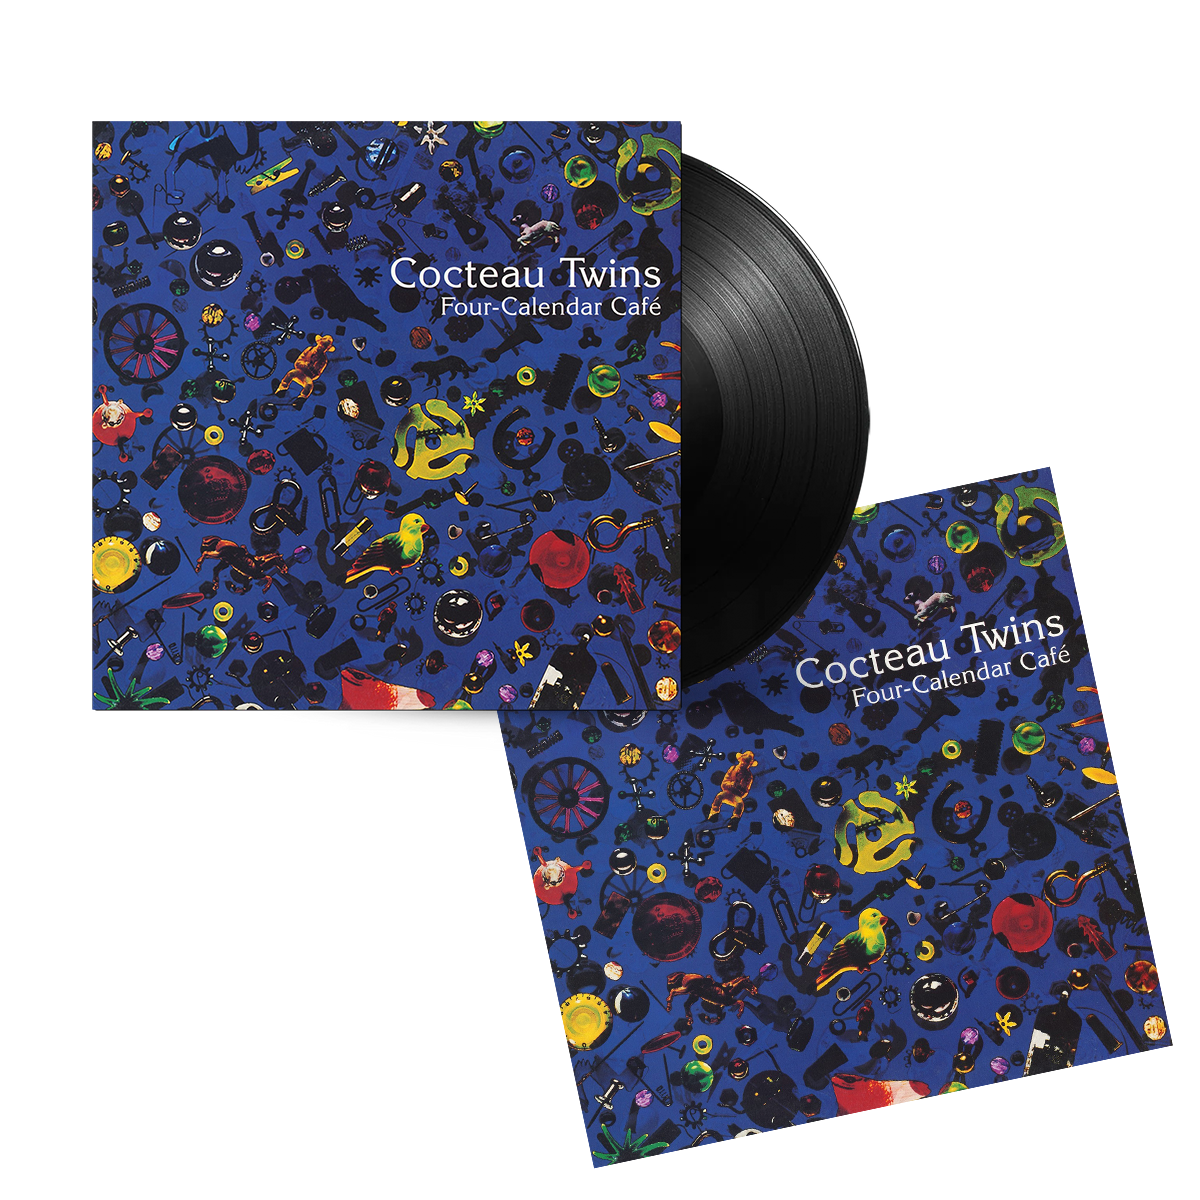 Four-Calendar Cafe: Vinyl LP & Exclusive Spot Gloss Litho Art Print [200 Only]